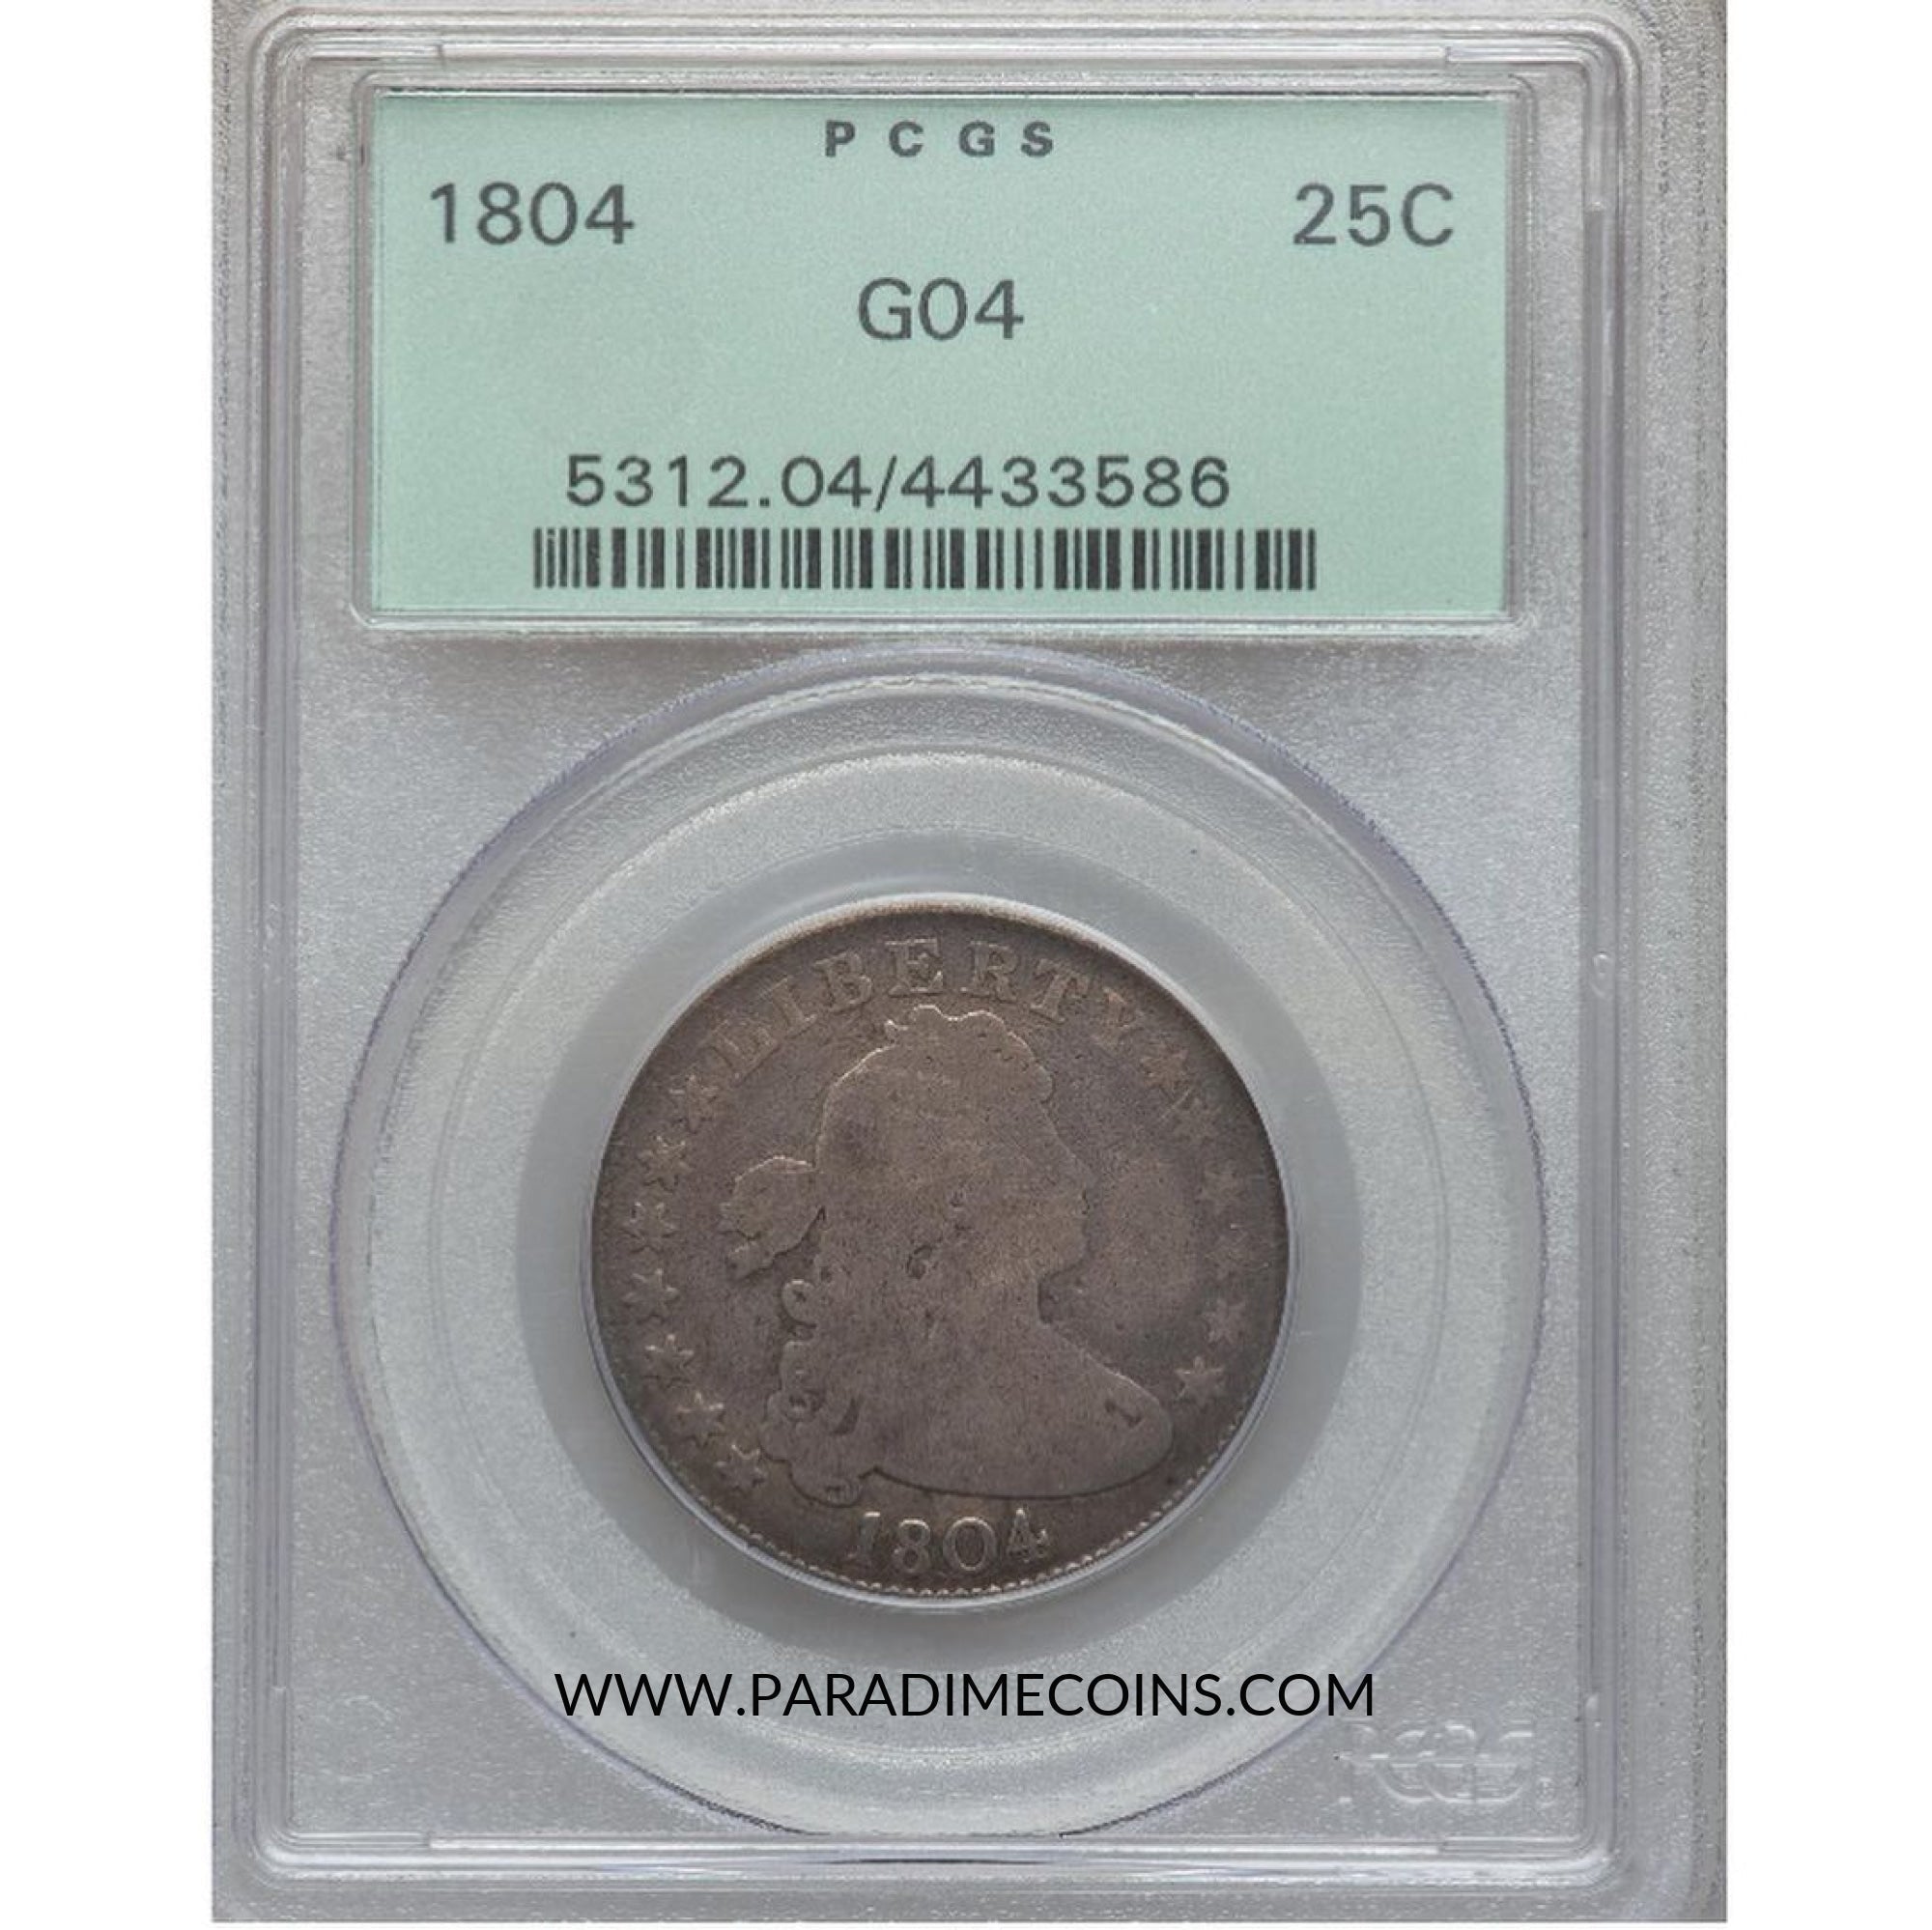 1804 25C G04 OGH PCGS - Paradime Coins | PCGS NGC CACG CAC Rare US Numismatic Coins For Sale